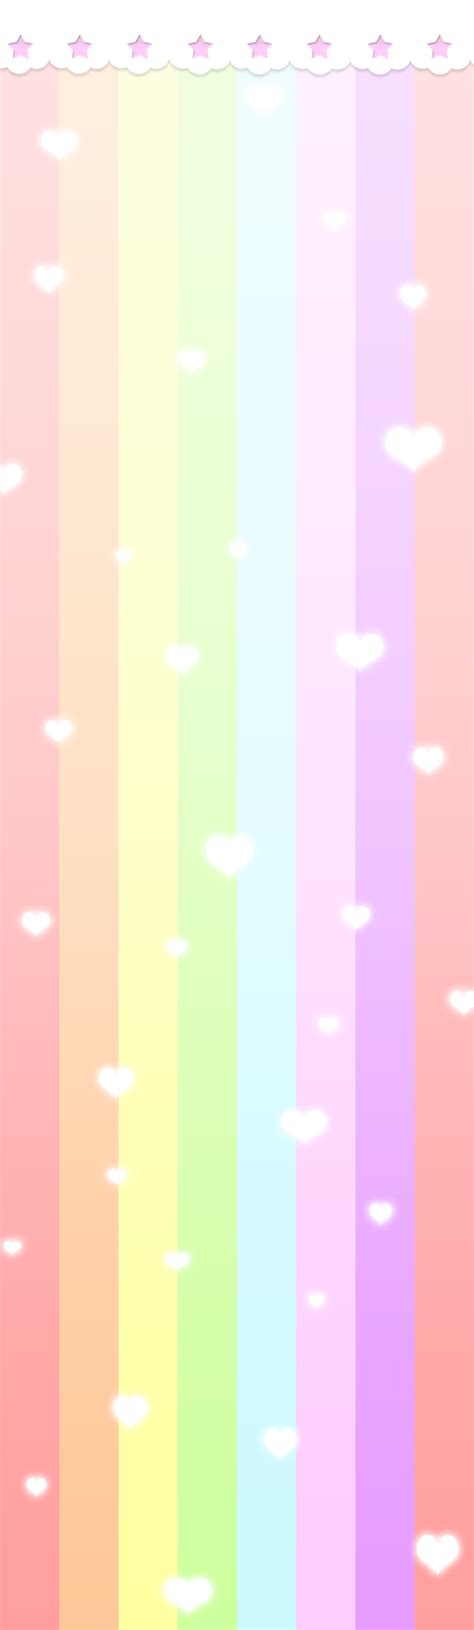 Cute Background Pastel Rainbow Greeneyesstyle